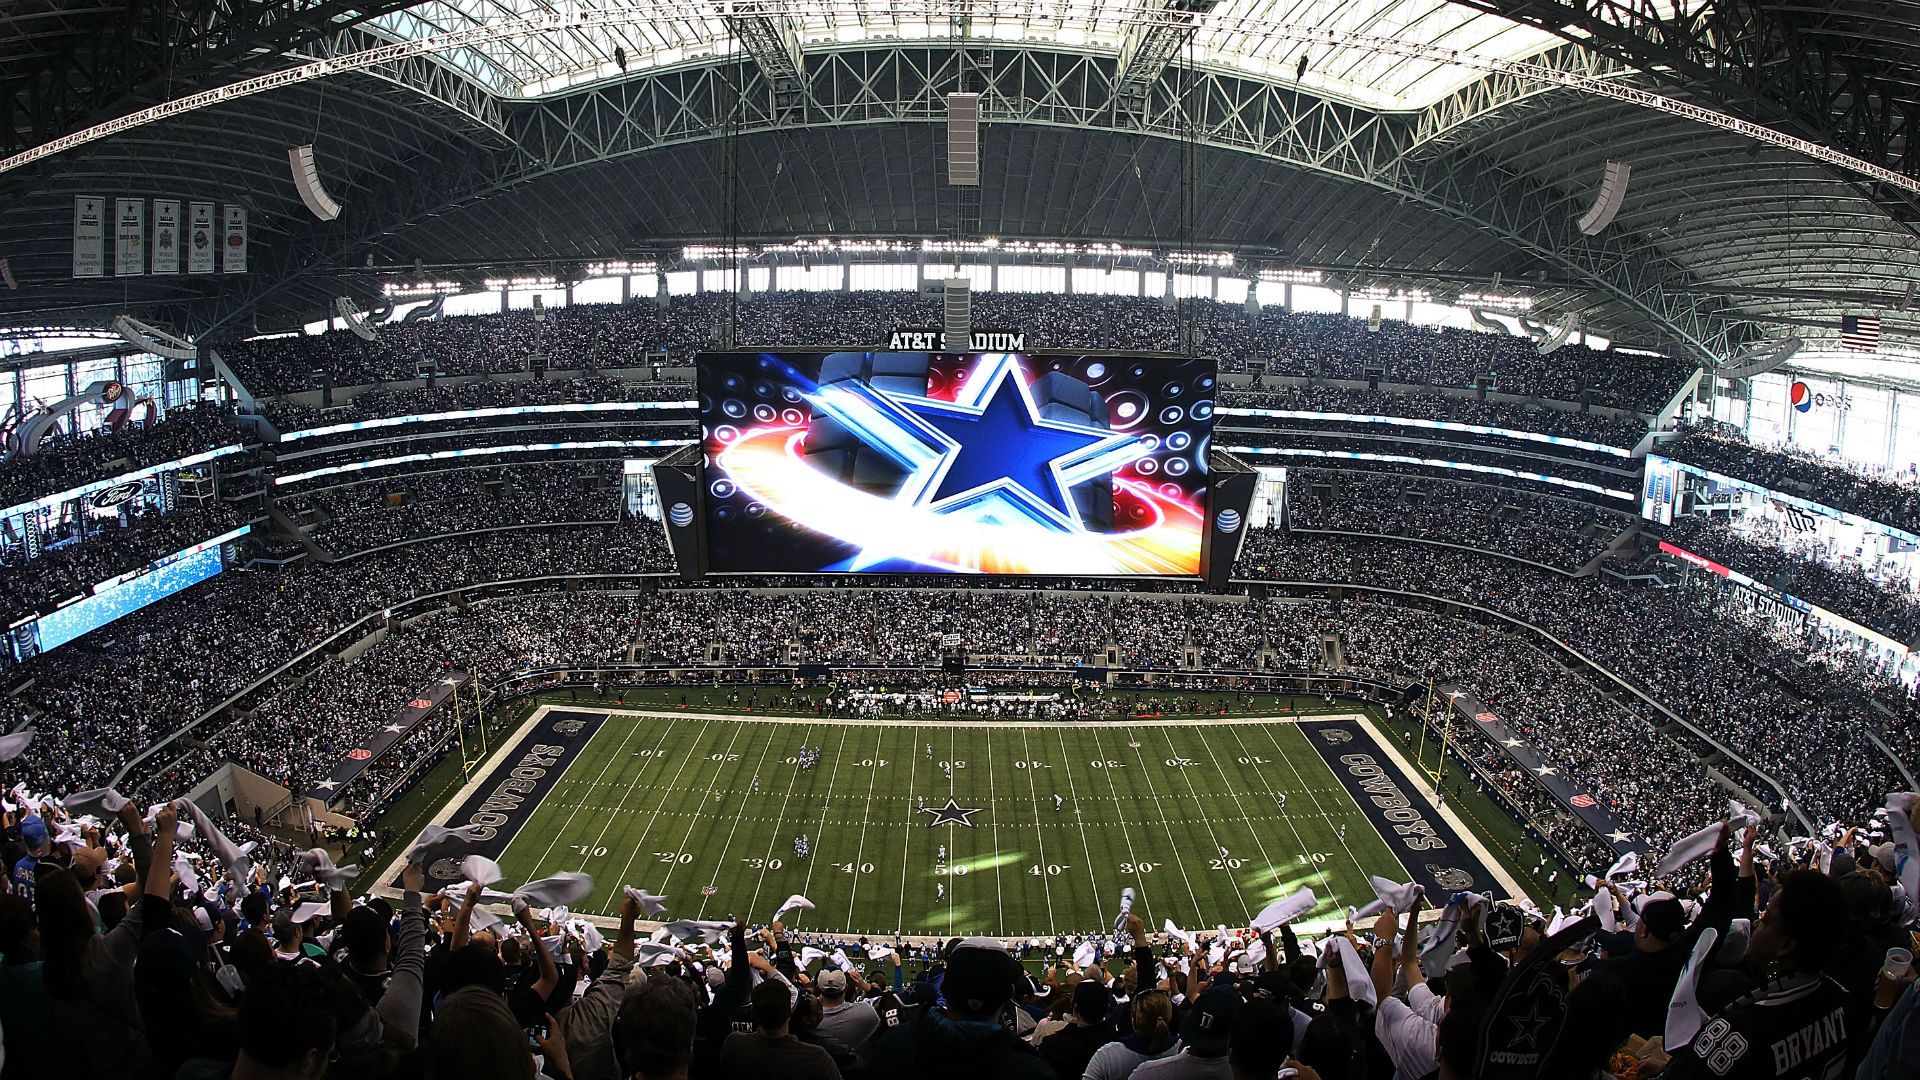 Dallas Cowboys - HD Wallpaper 